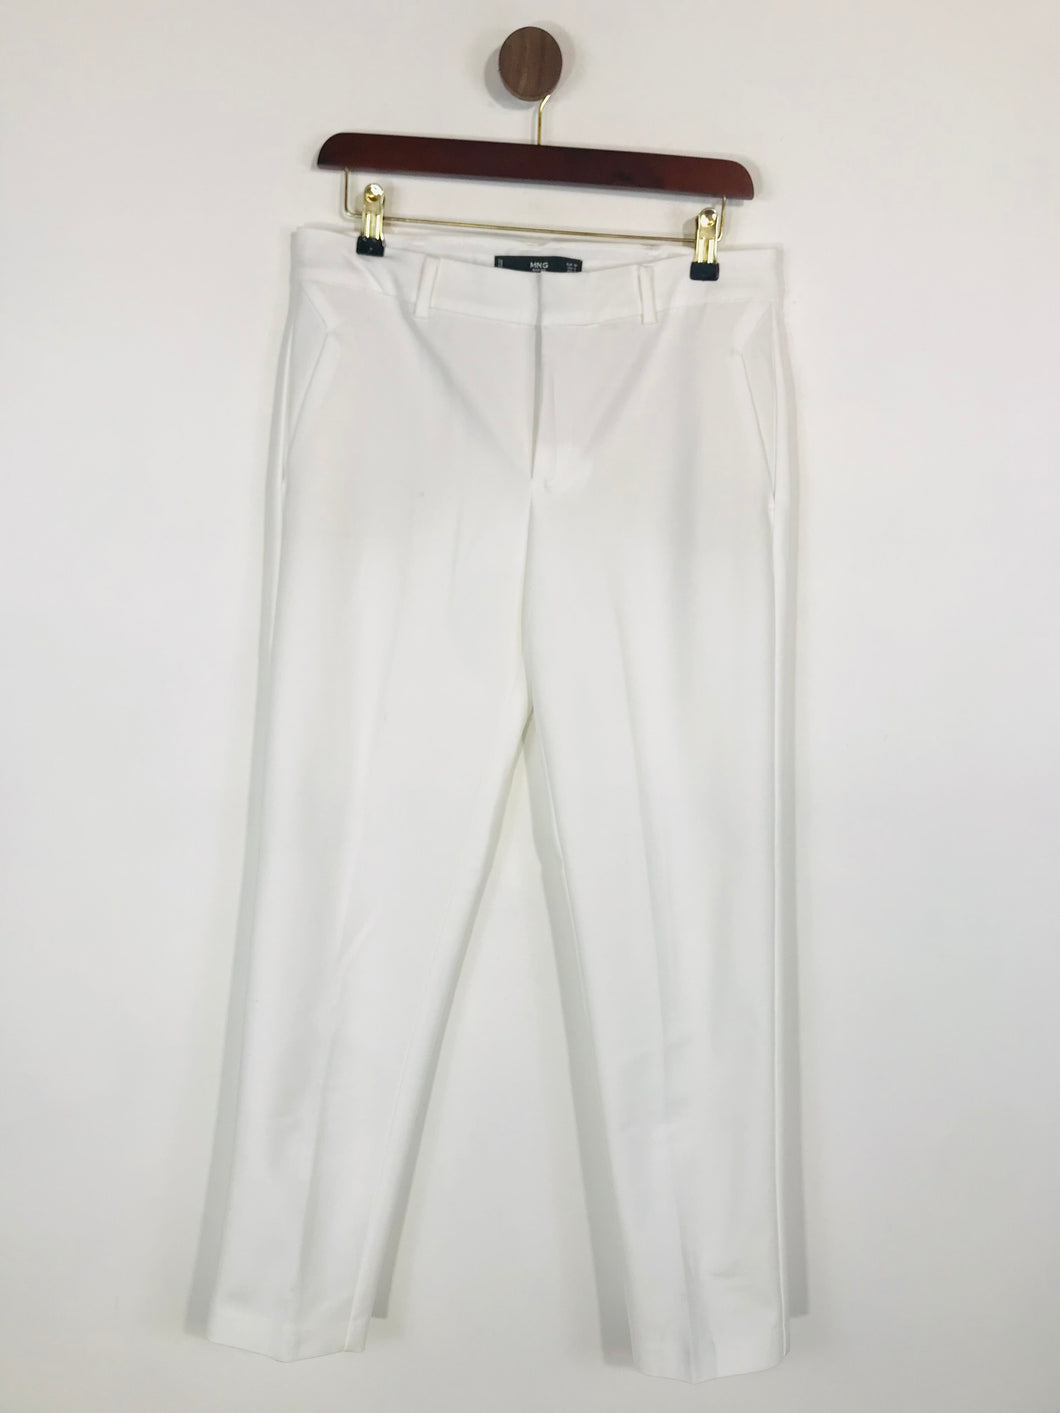 Mango Women's High Waisted Tapered Smart Trousers | EU38 UK10 | White